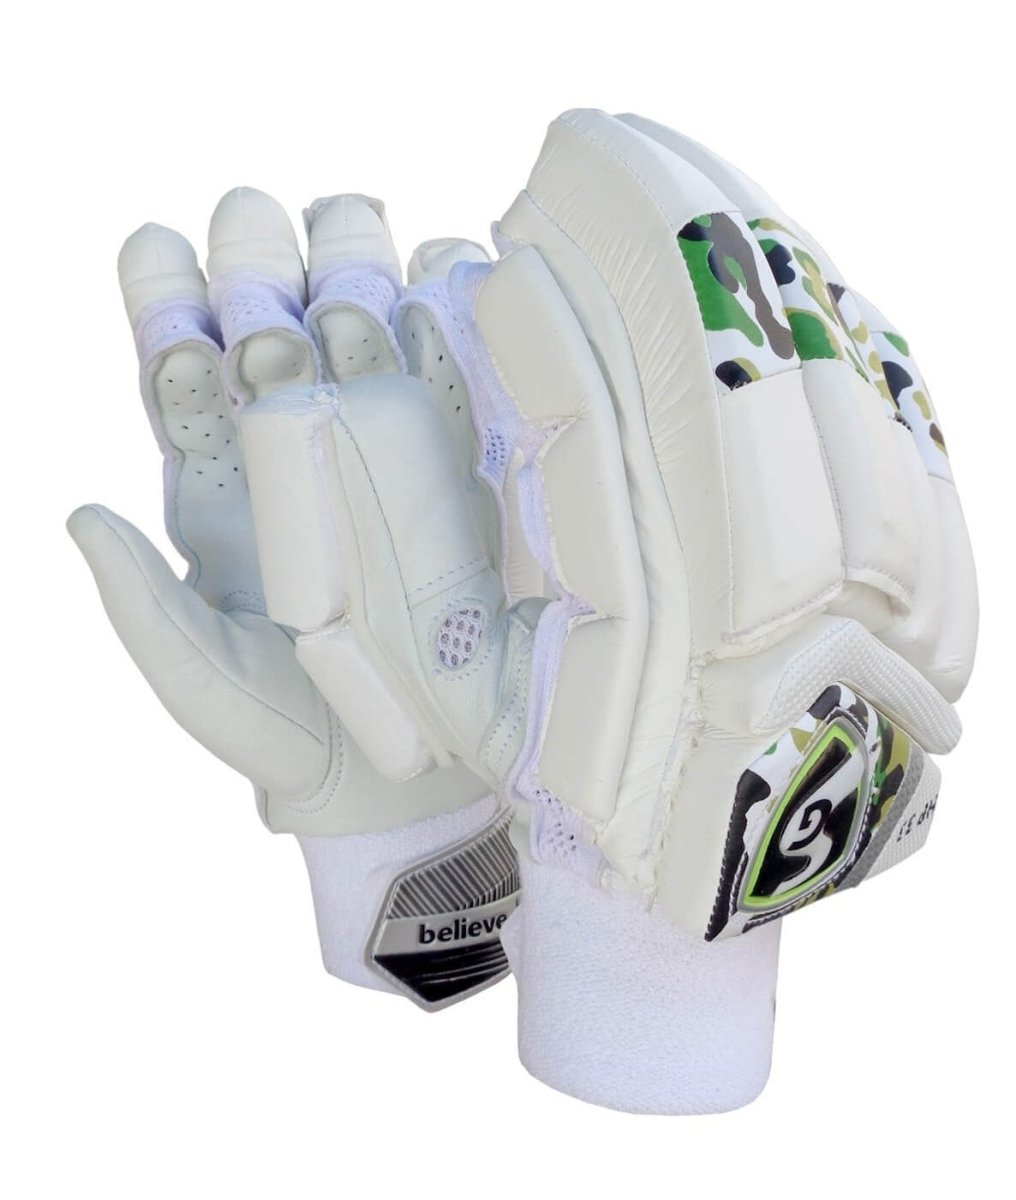 SG HP 33 Cricket Batting Gloves.